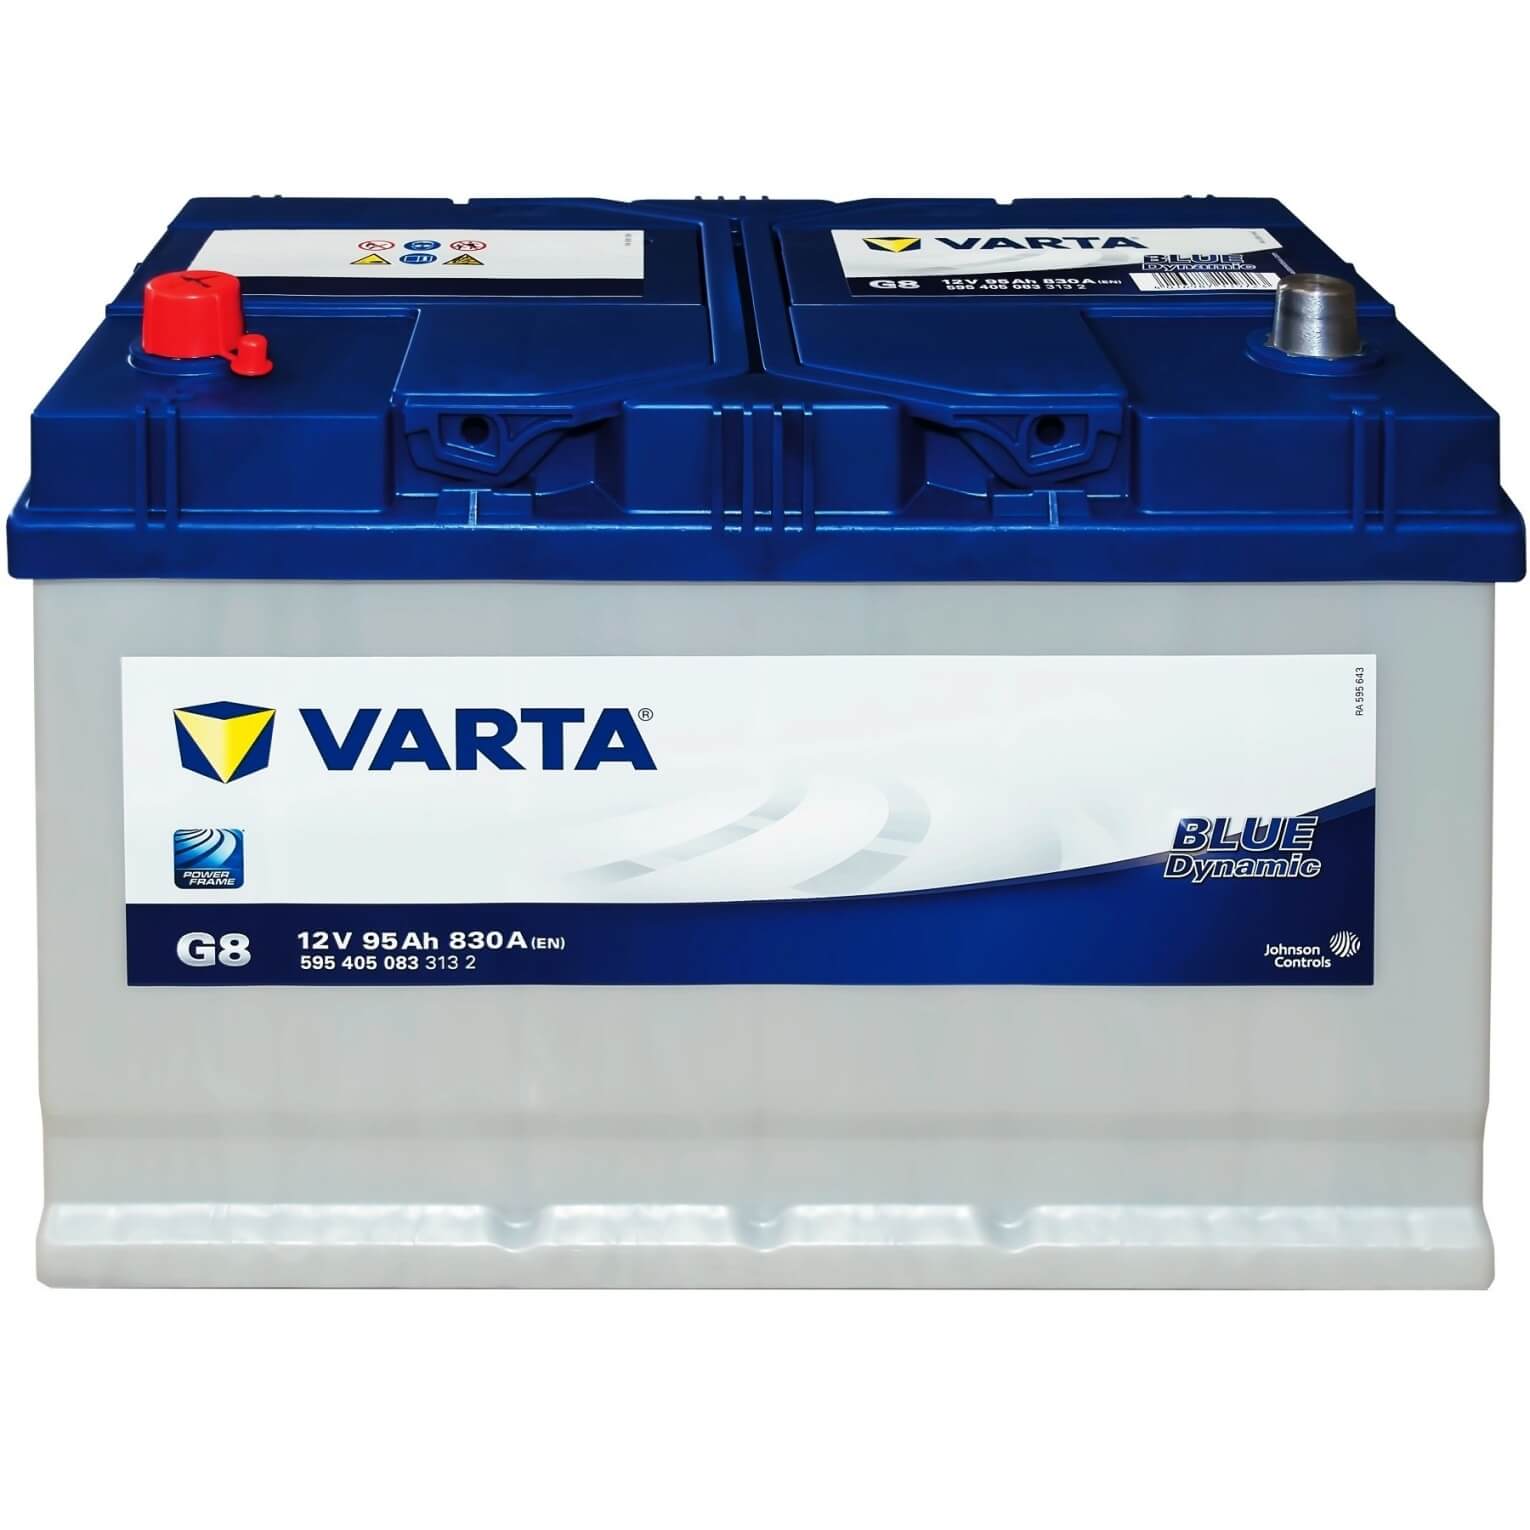 Autobatterie 12V 95Ah 800A Varta G3 Blue Dynamic Starterbatterie  5954020803132